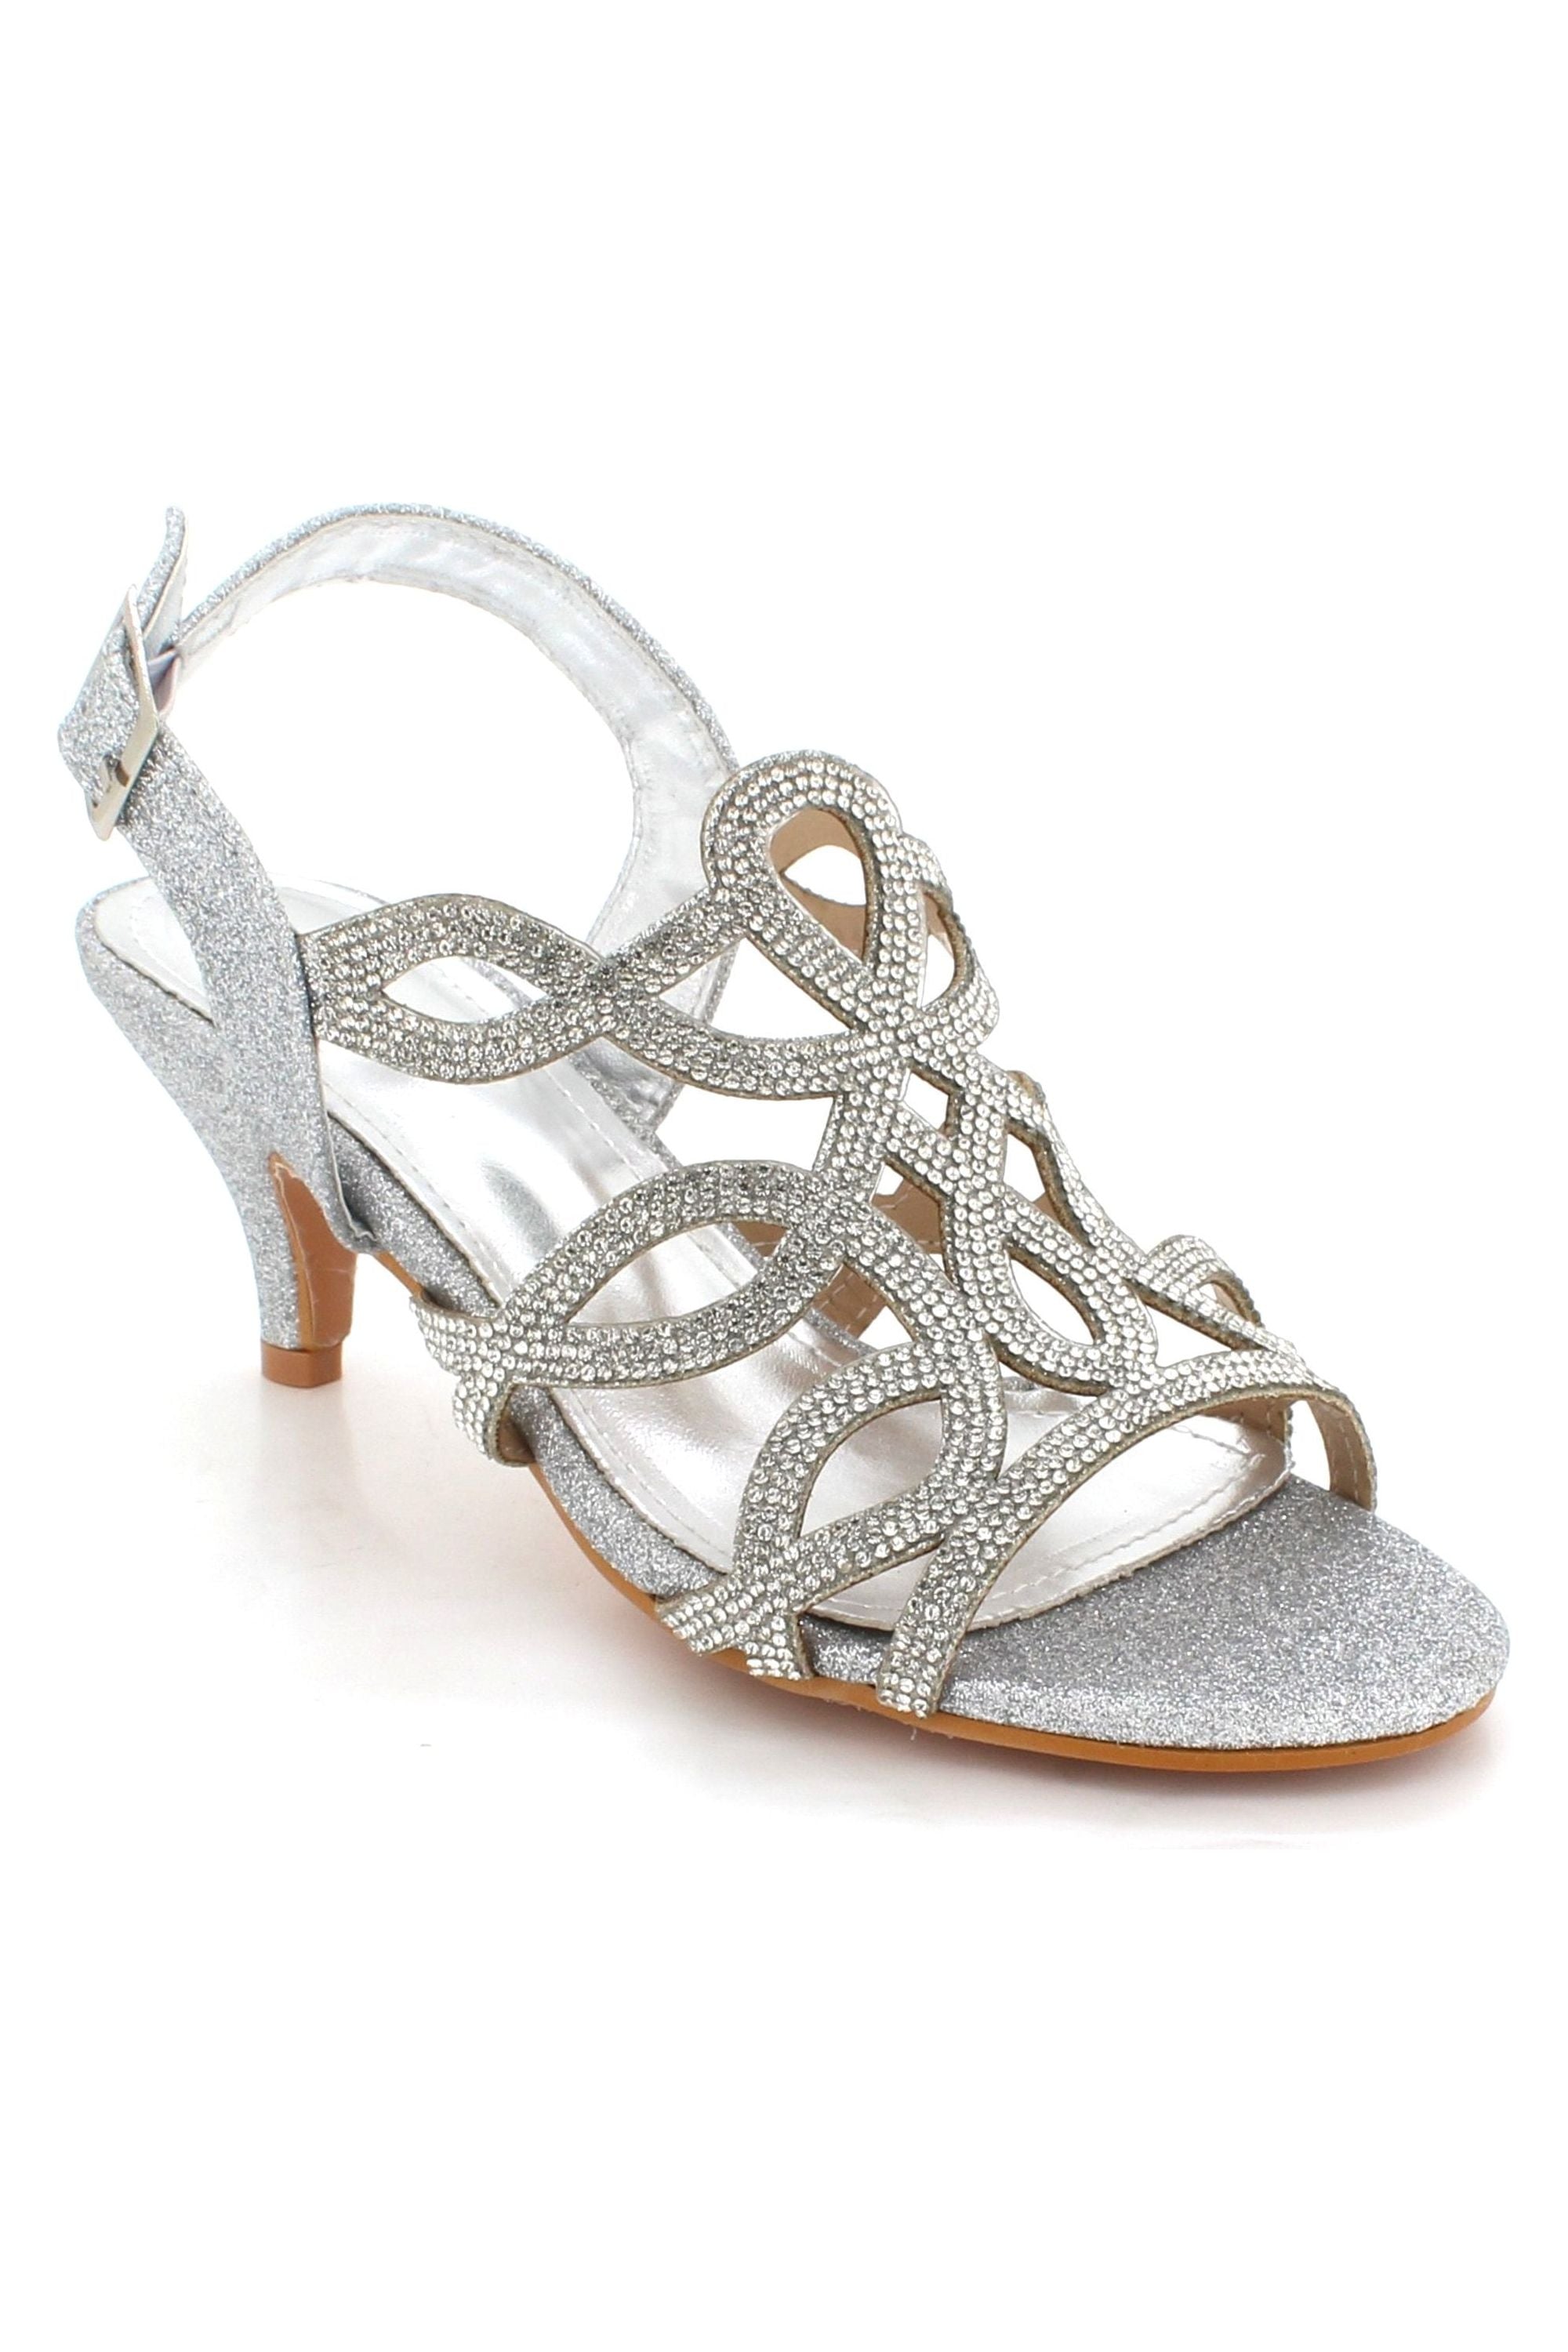 Glittery Open-toe Evening Party Prom Wedding Bridal Crystal Slip-On Medium Heel L7561